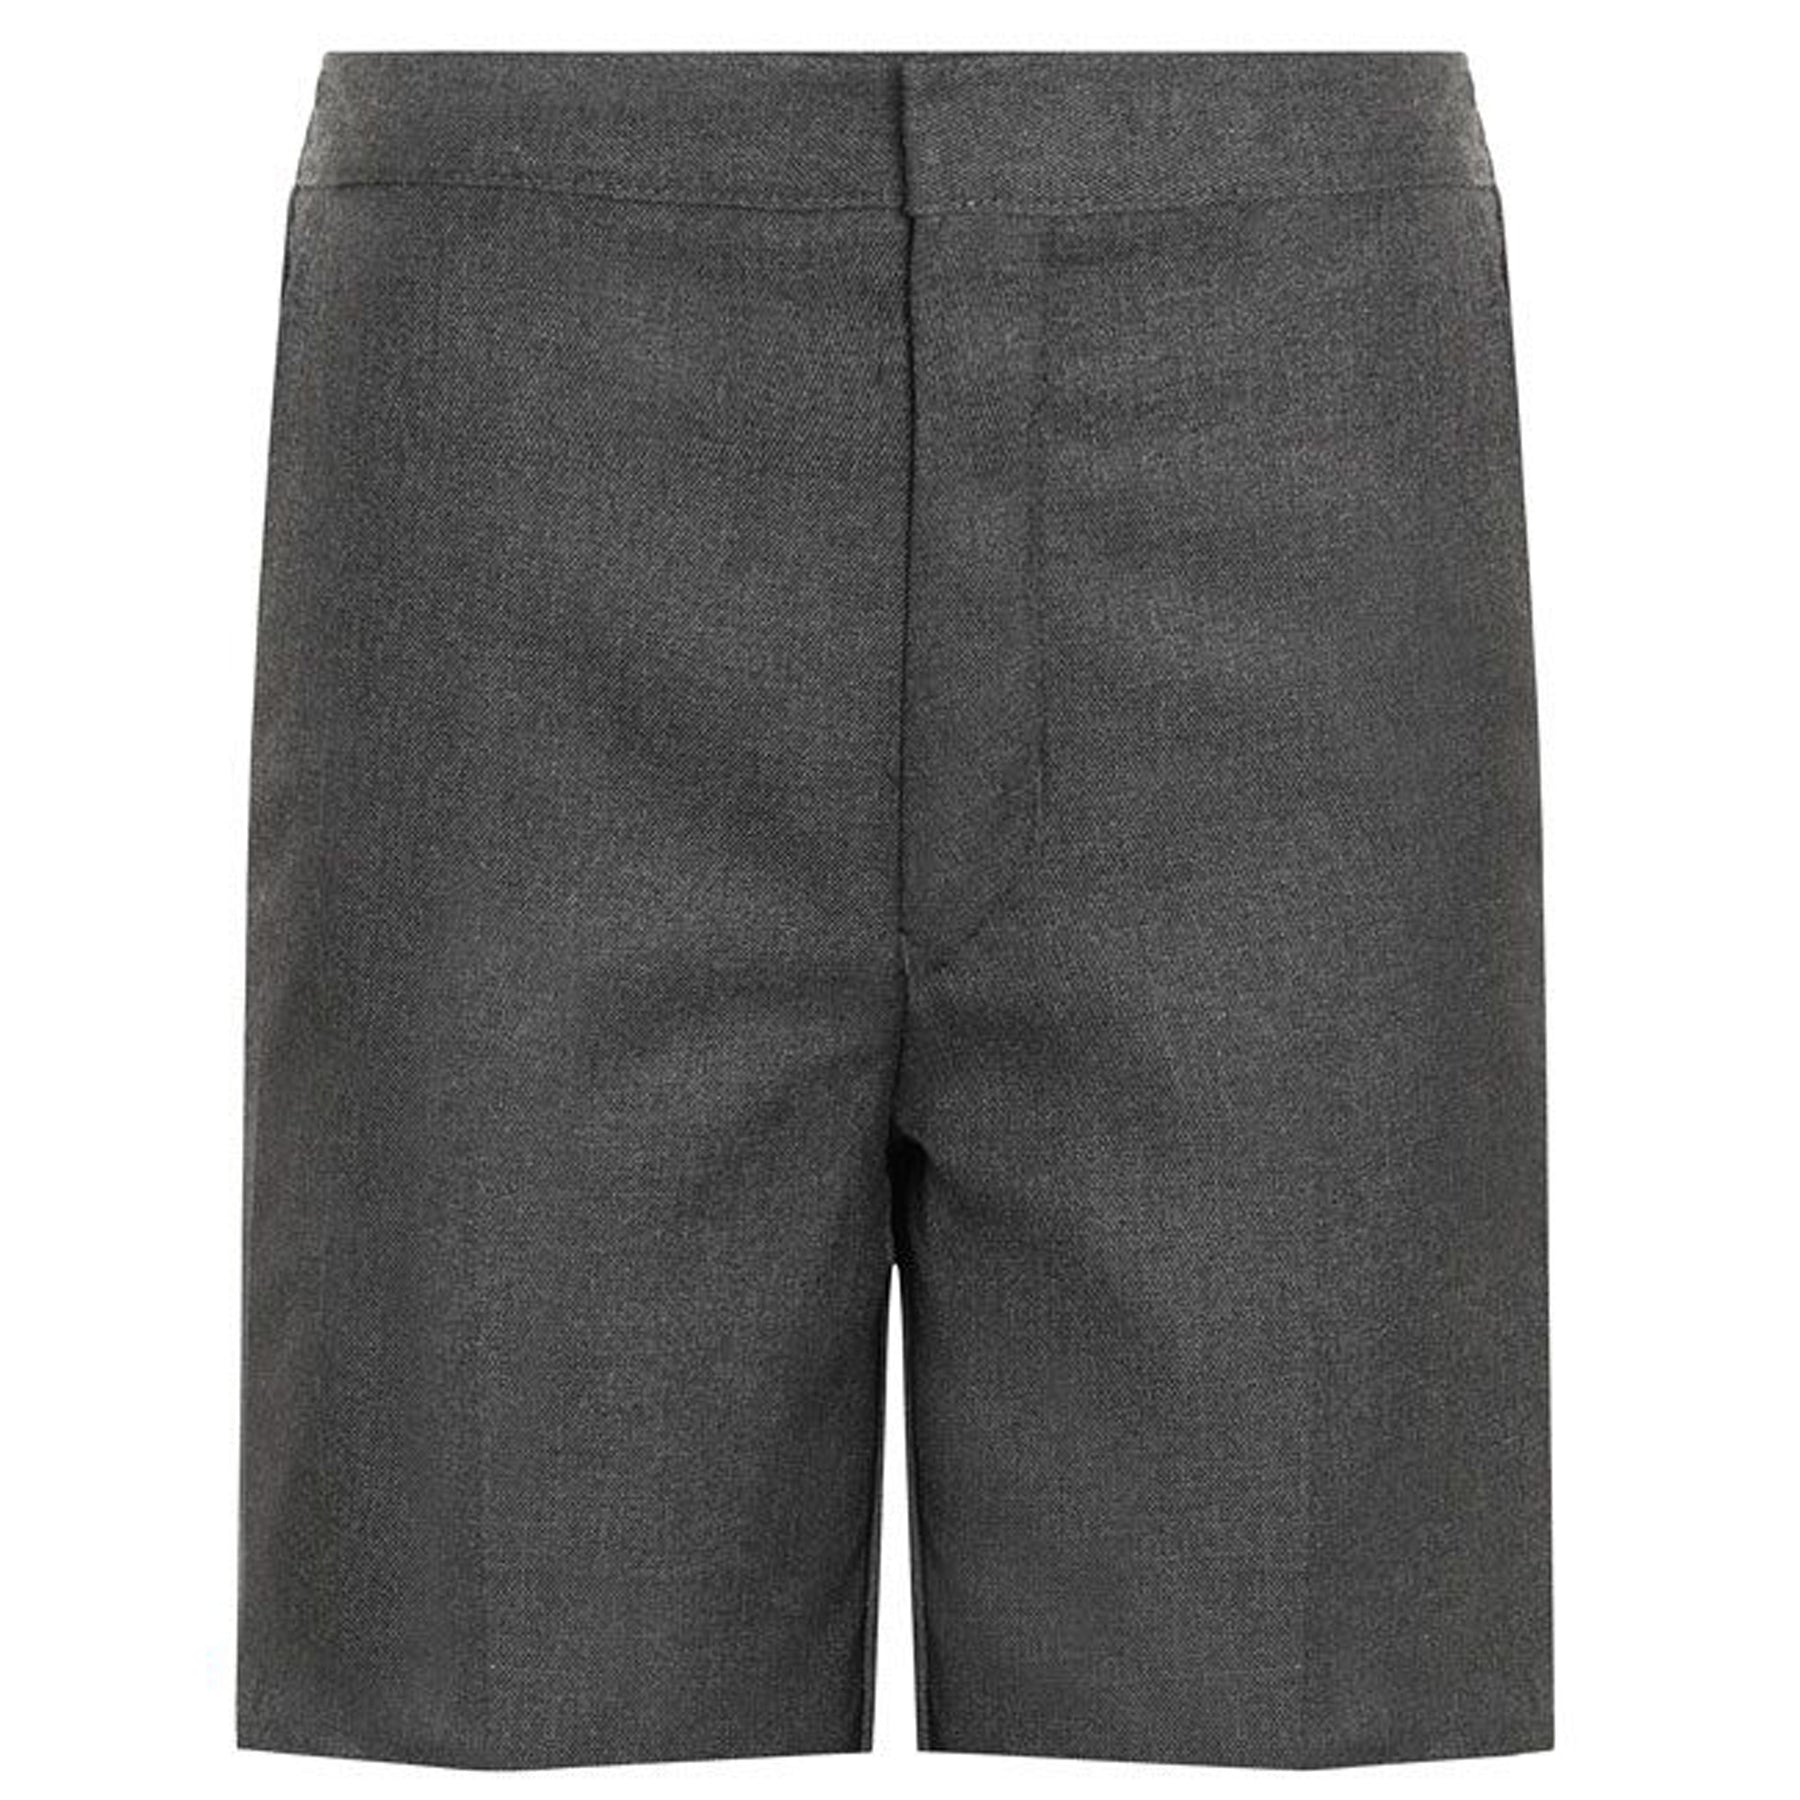 Shorts: Grey